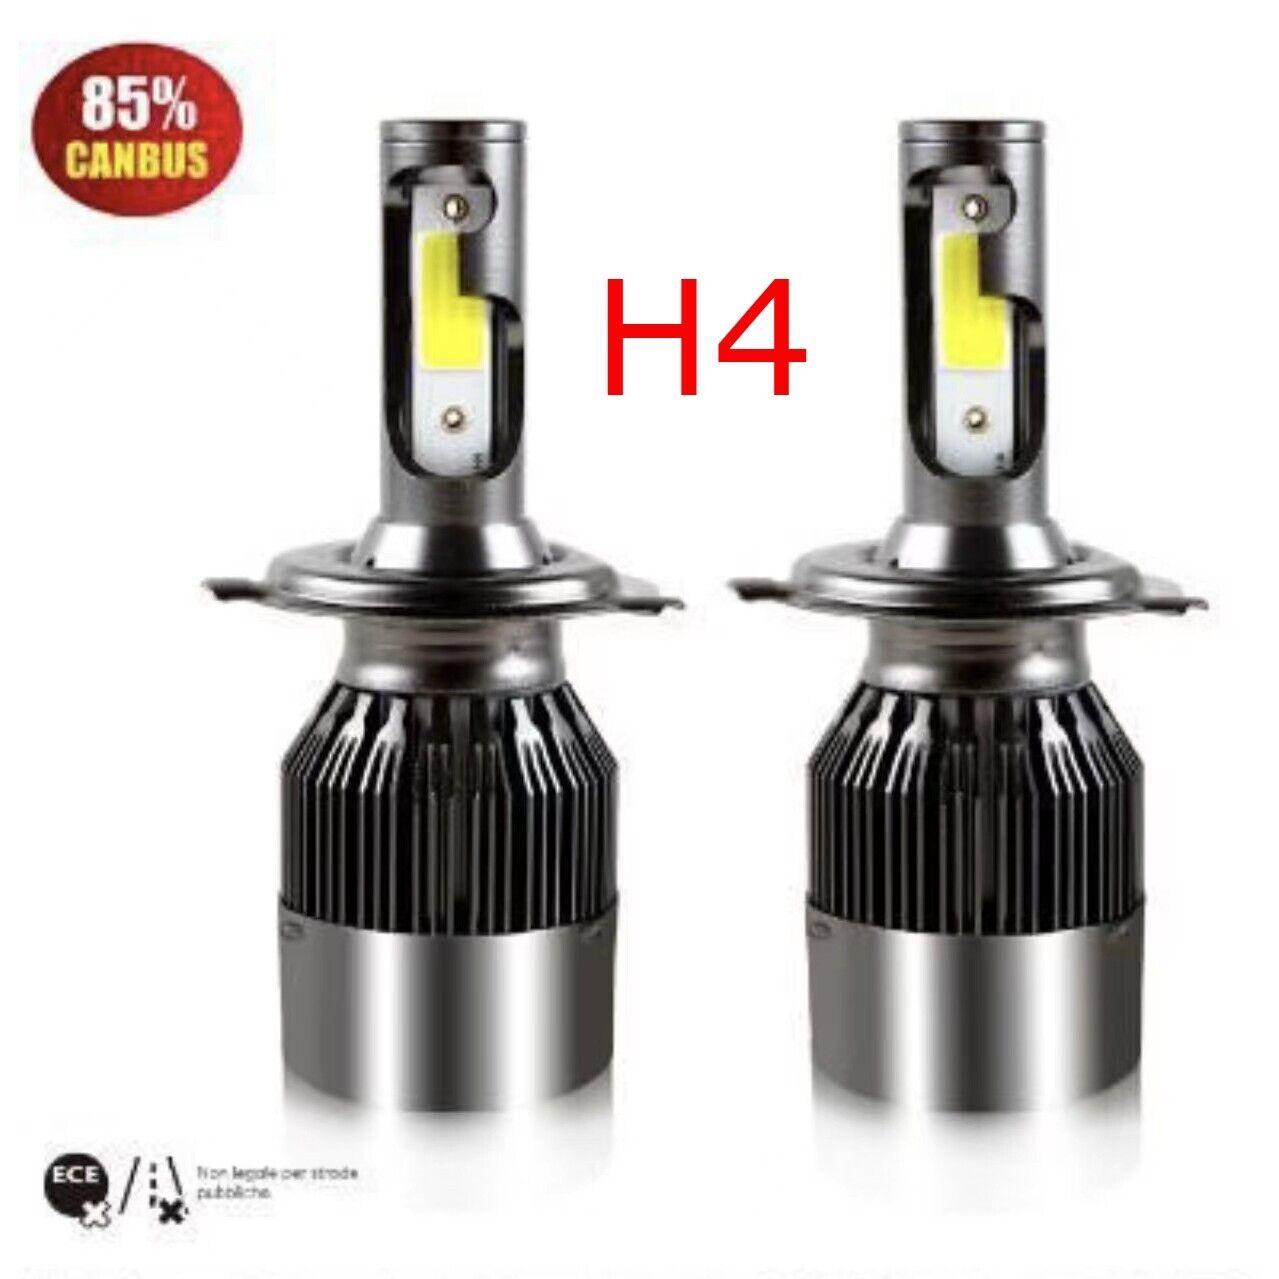 2 x Bombillas H1, H4, H7 LED Coche 26W 2340LM Lampara LED 9-36V